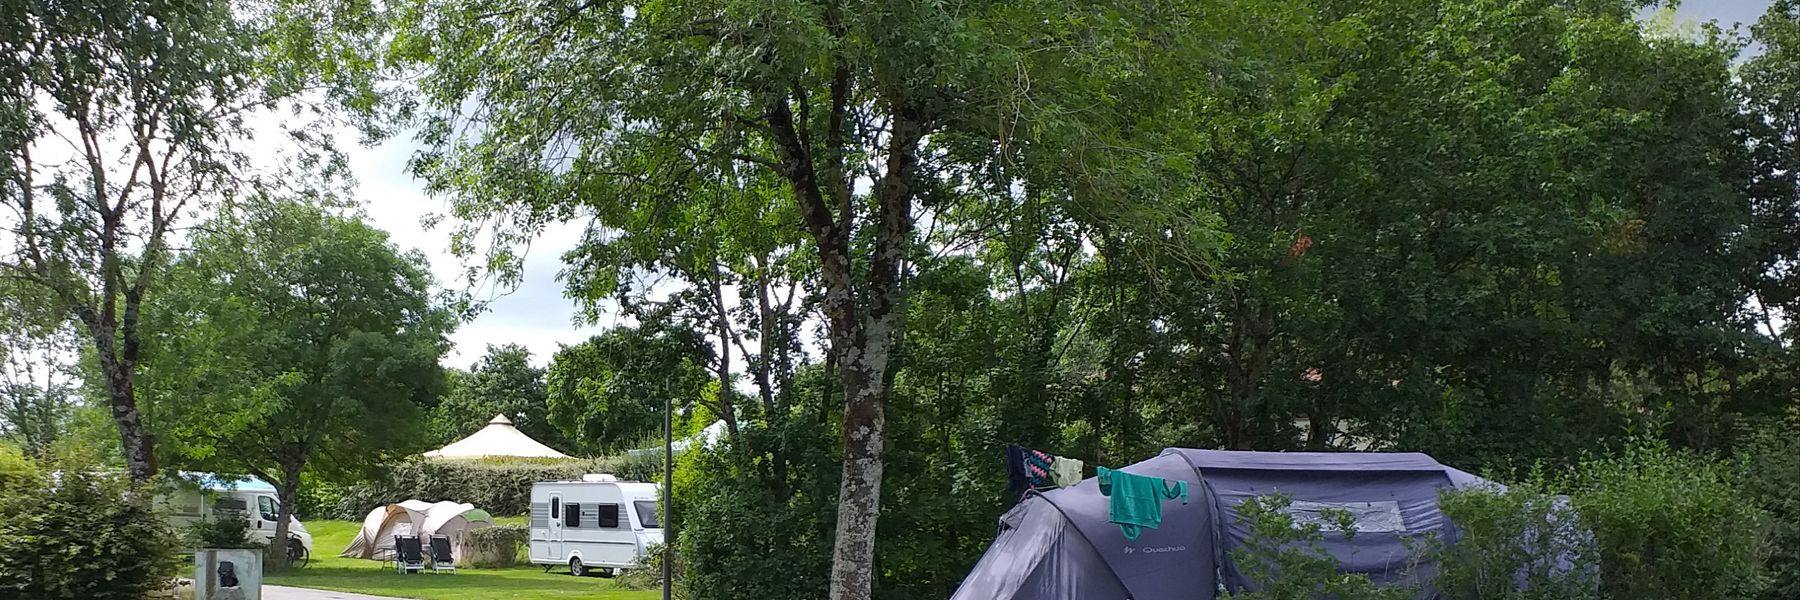 Camping Le Bois Vert